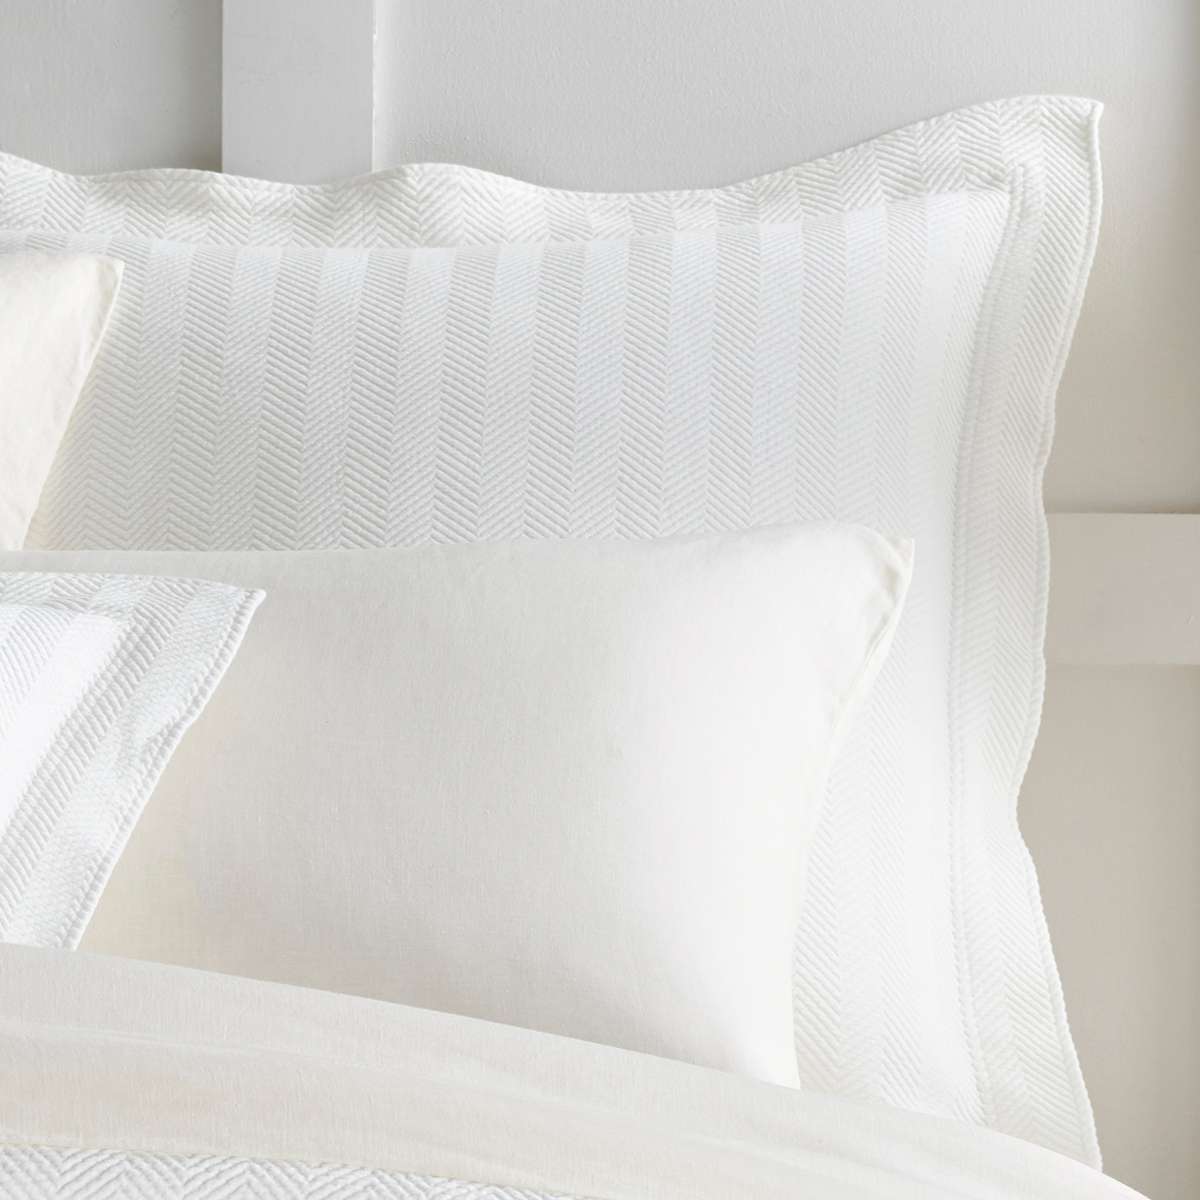 Herringbone White Matelasse Sham styled with white bedding. Styled view. 